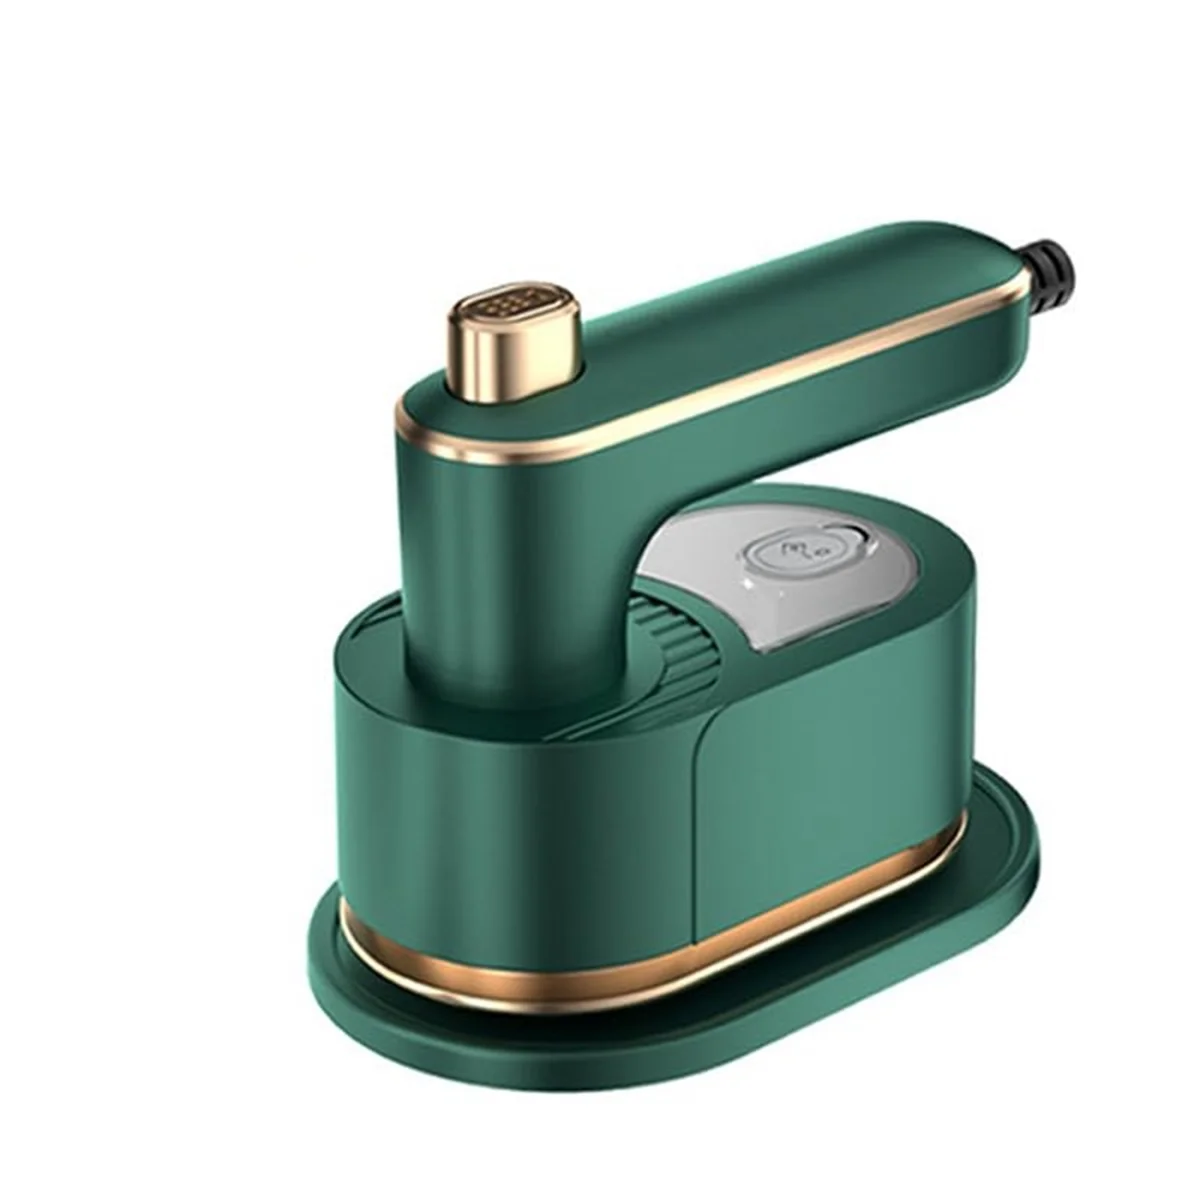 

180° Rotatable Handheld Mini Steam Iron Travel Garment Steamer Steam Iron for Fabric Clothes Ironing Tool UK Plug,Green